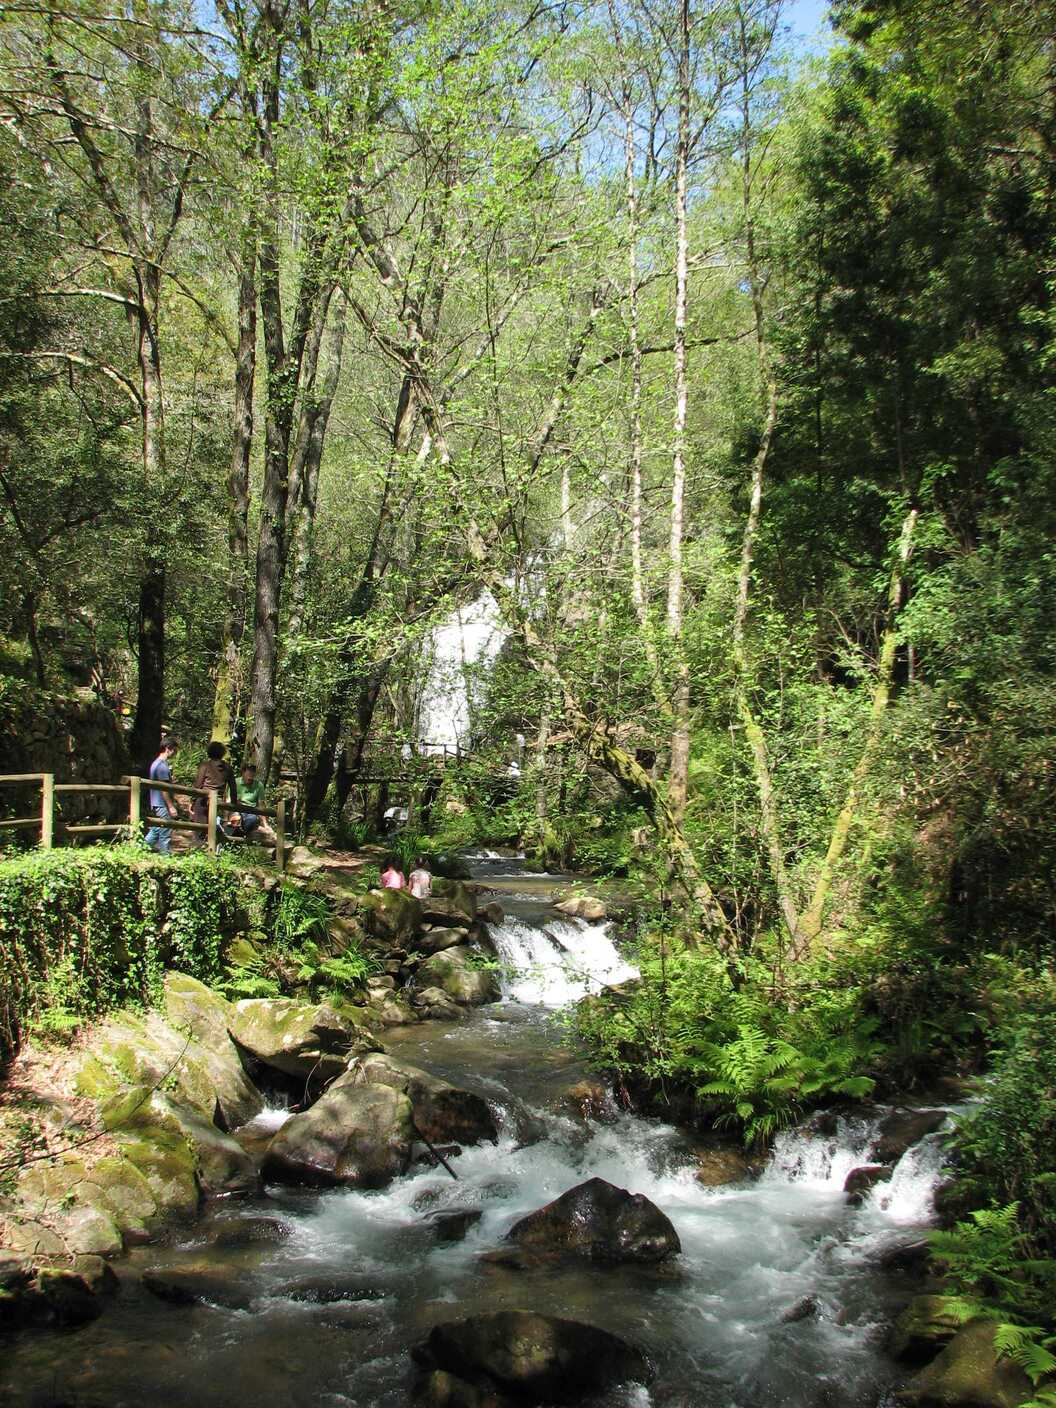 Cabreia Waterfall